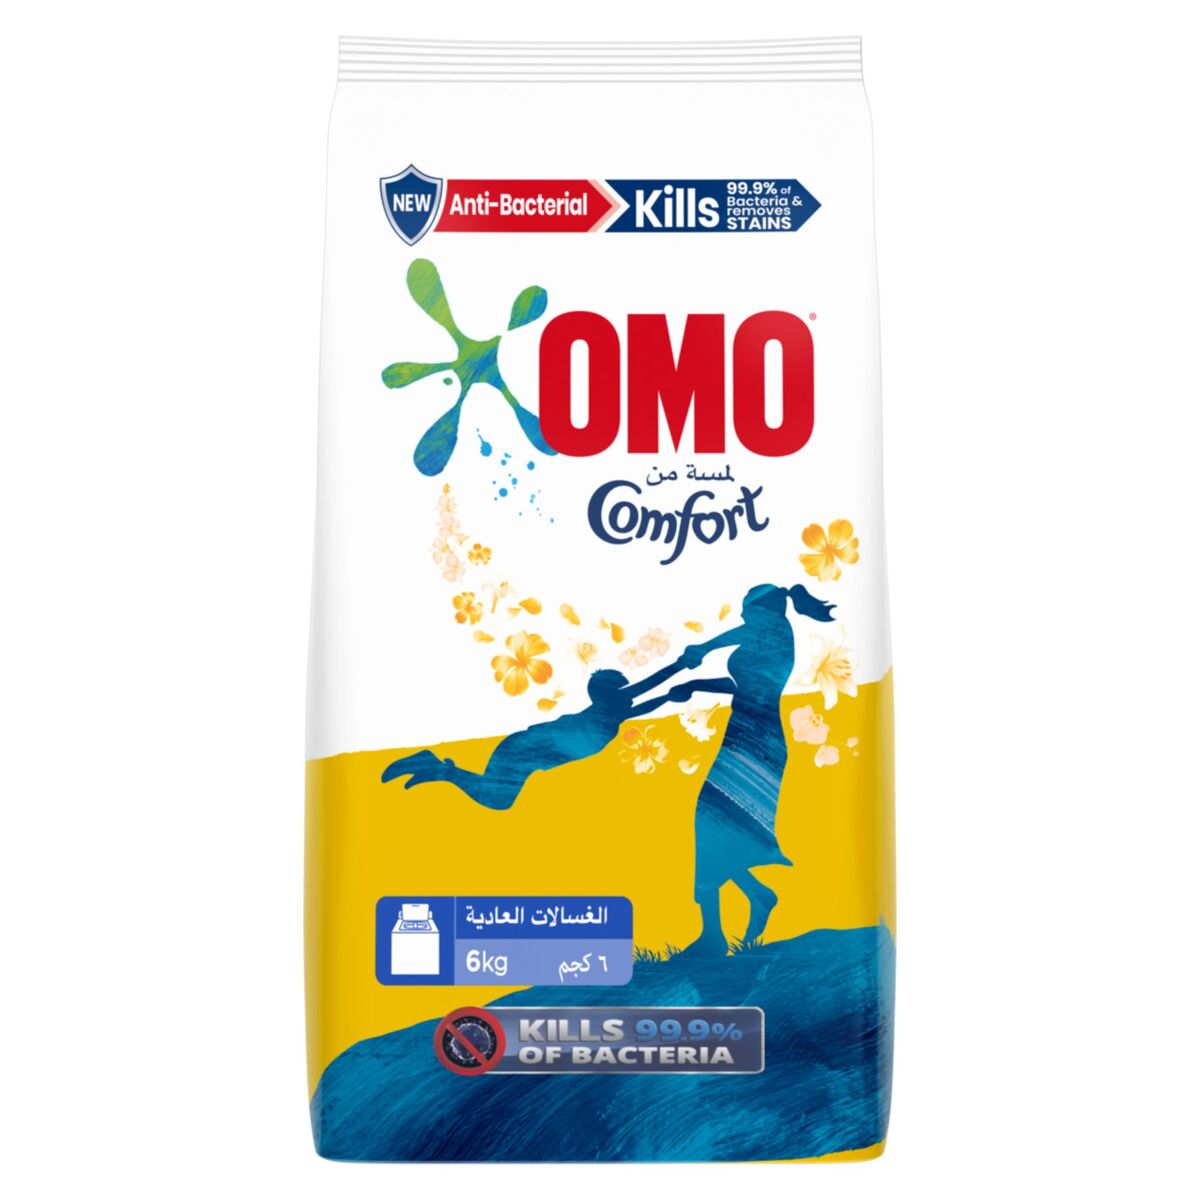 Omo Comfort Semi-Automatic Anti-Bacterial Washing Powder 6 kg